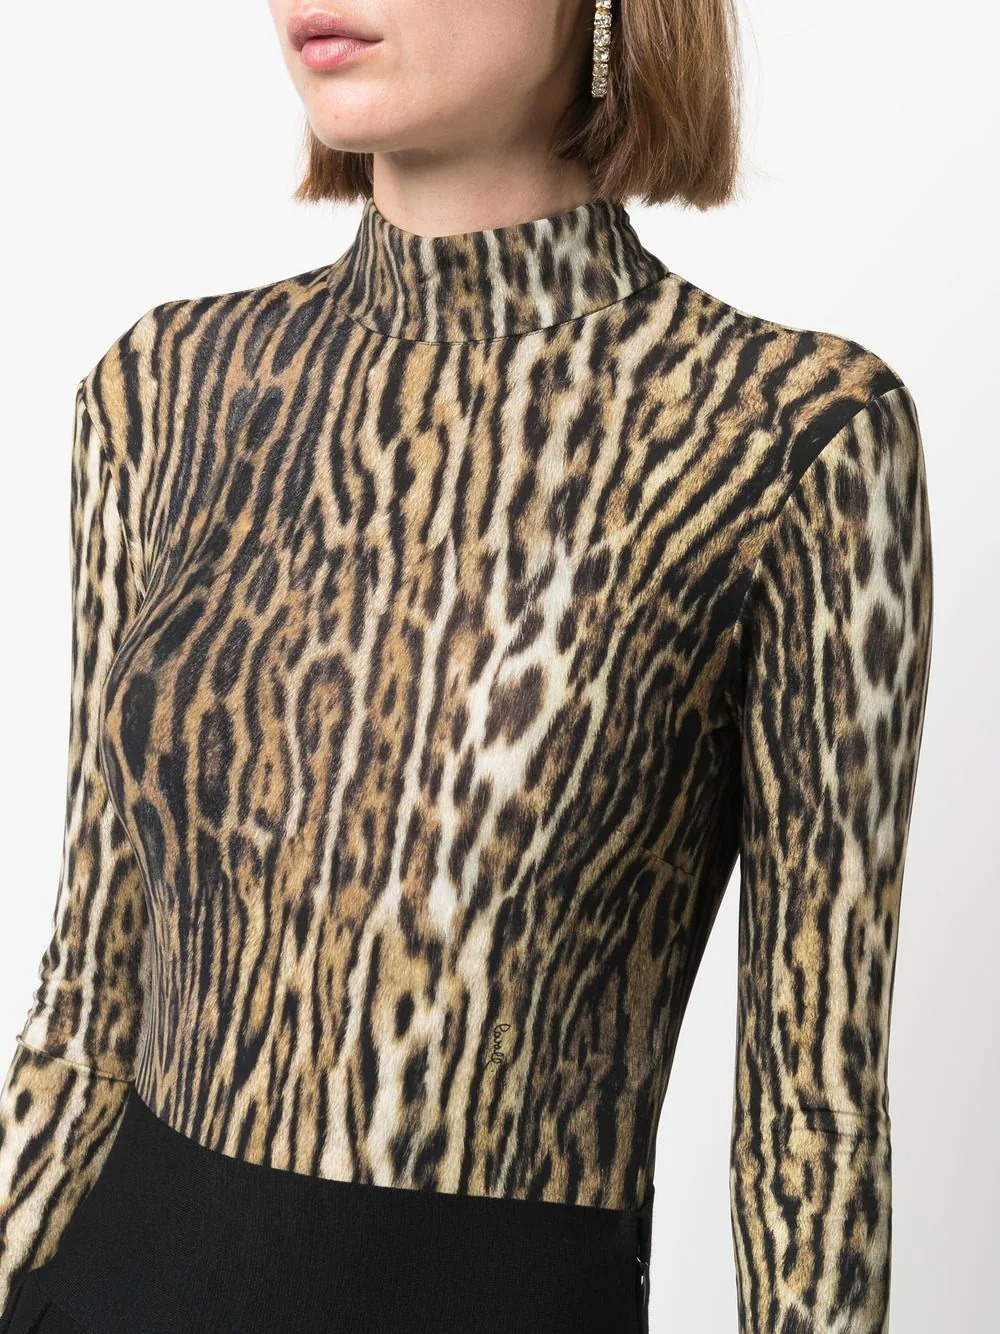 Cilento Designer Wear Leopards Bodysuit Taupe